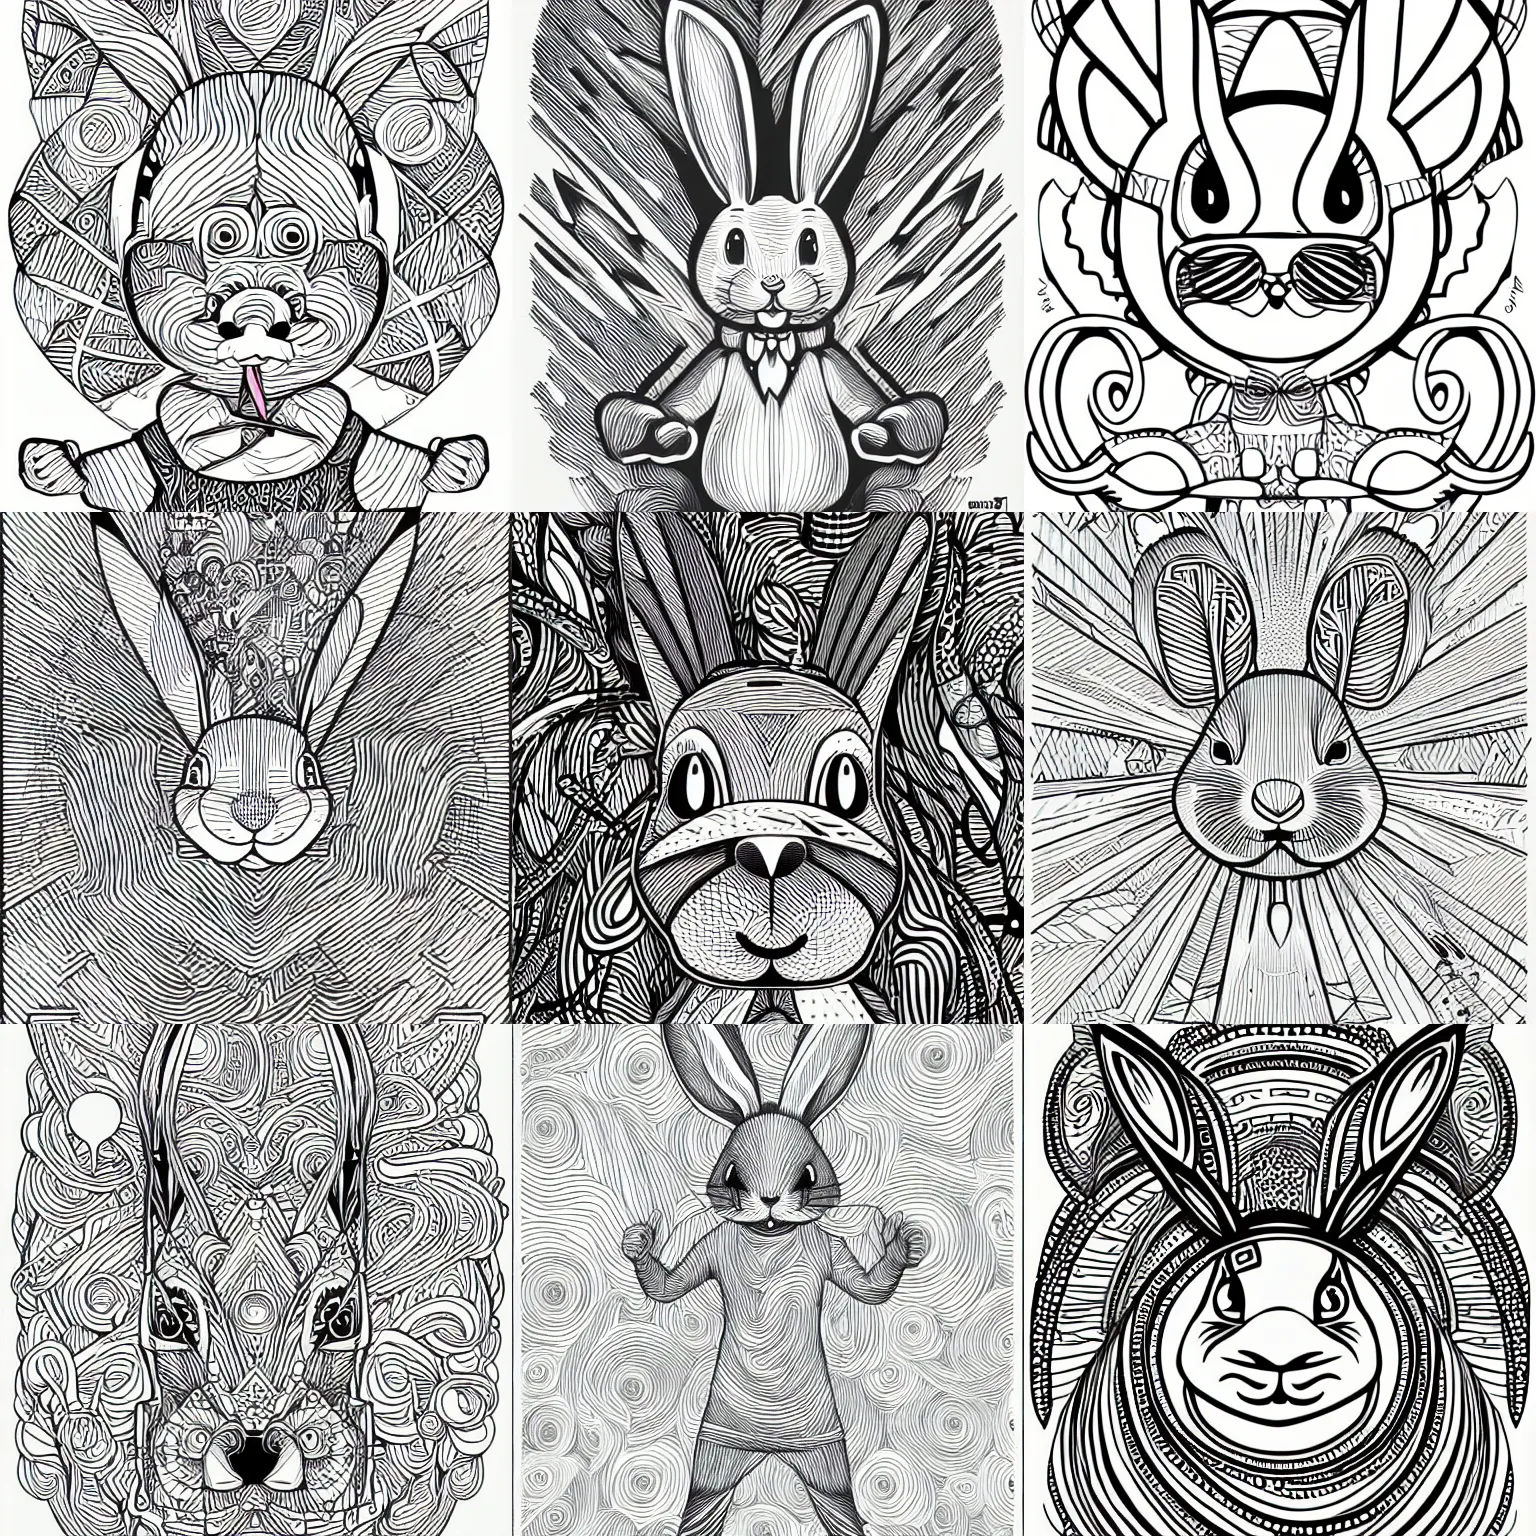 Prompt: line art crazy rabbit vector illustration, bold lines, svg, mcbess, behance, devianart, artstation, dribble, creary, ello, cgsociety, drawcrowd, pixiv, concept art world, our art corner, newgrounds, doodle addicts, penup